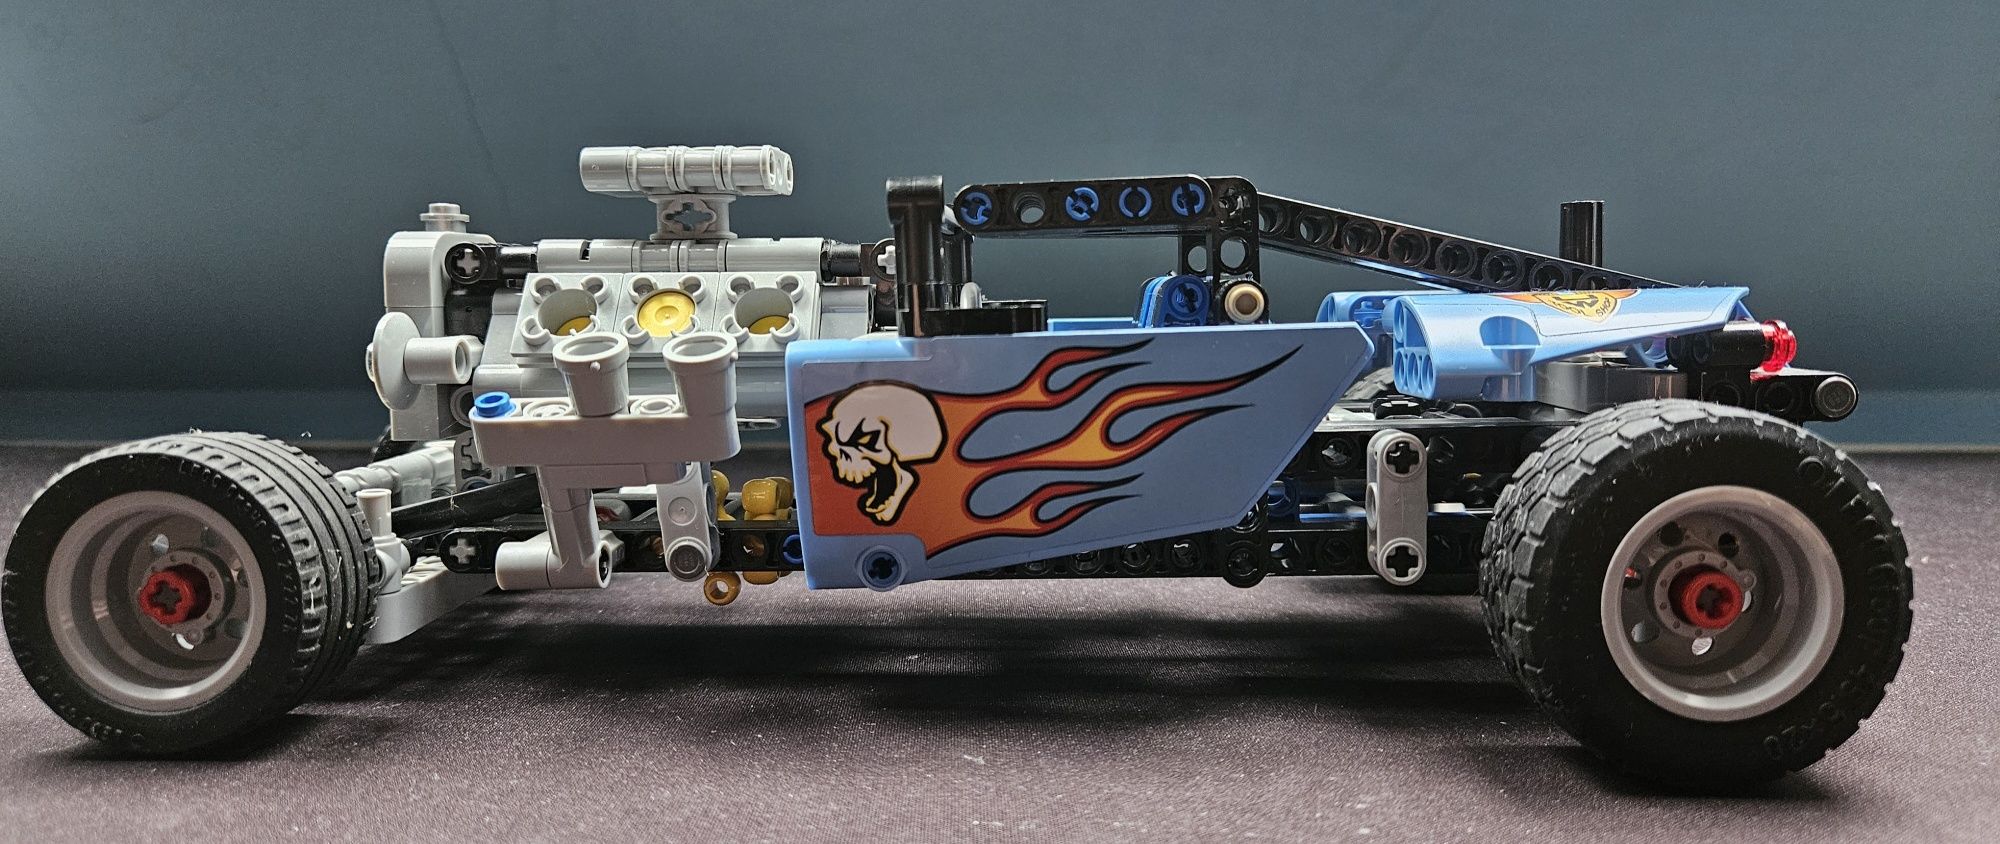 LEGO Technic 42022 - Hot rod